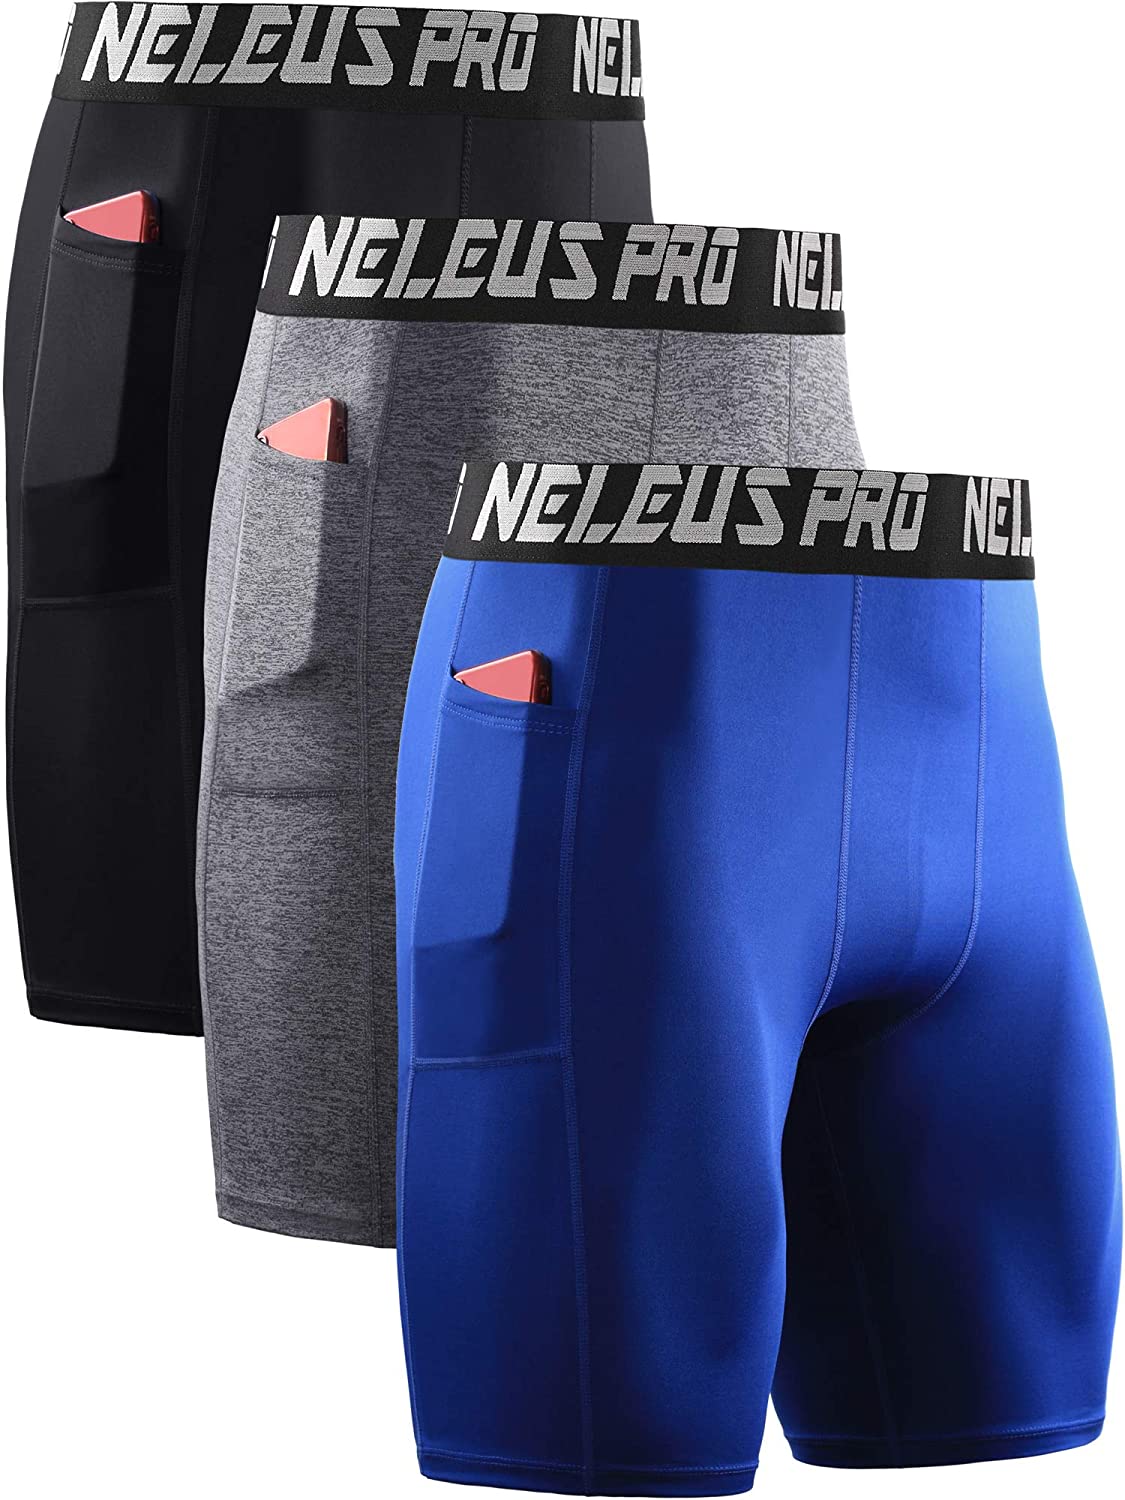  NELEUS Mens 3 Pack Athletic Compression Short